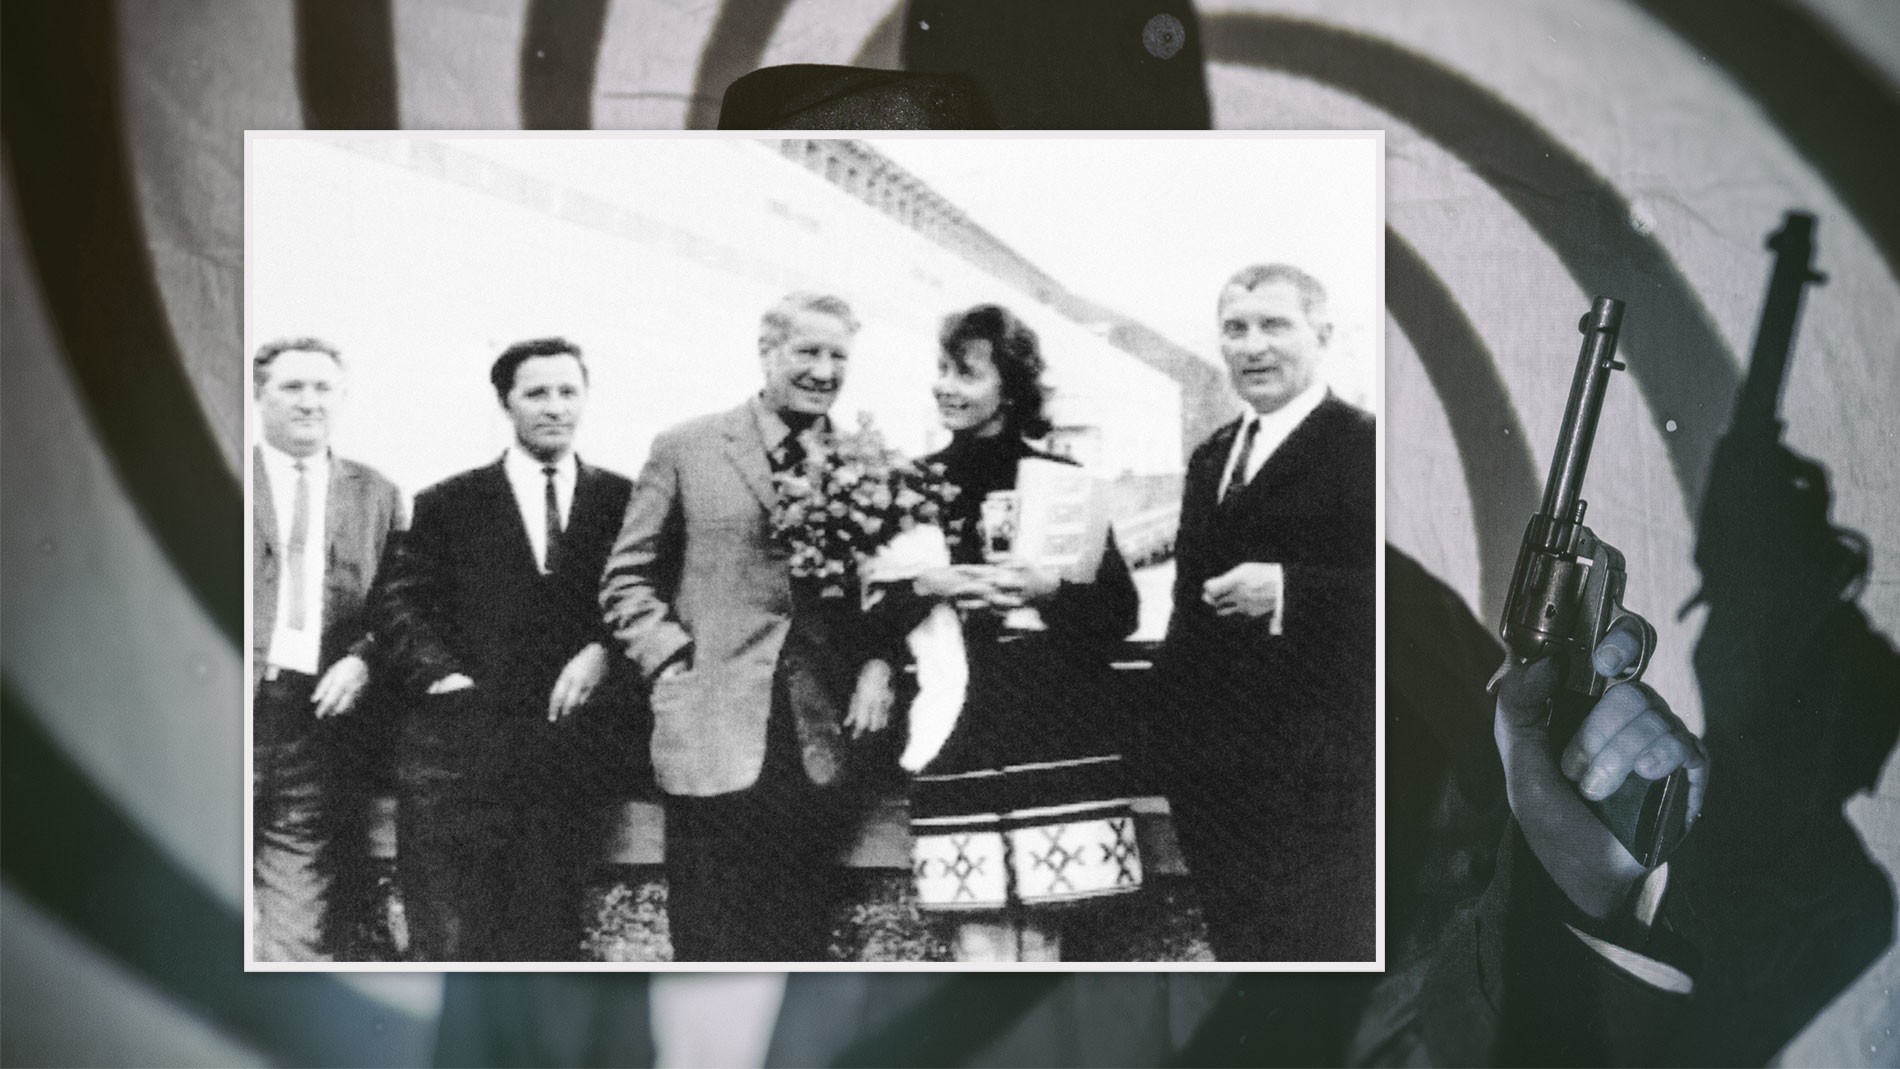 Советский разведчик Ким Филби (1912-1988) с женой Руфиной (на фото в центре). Фото из архива документов КГБ (1970–80-е годы). Фото © РИА "Новости"